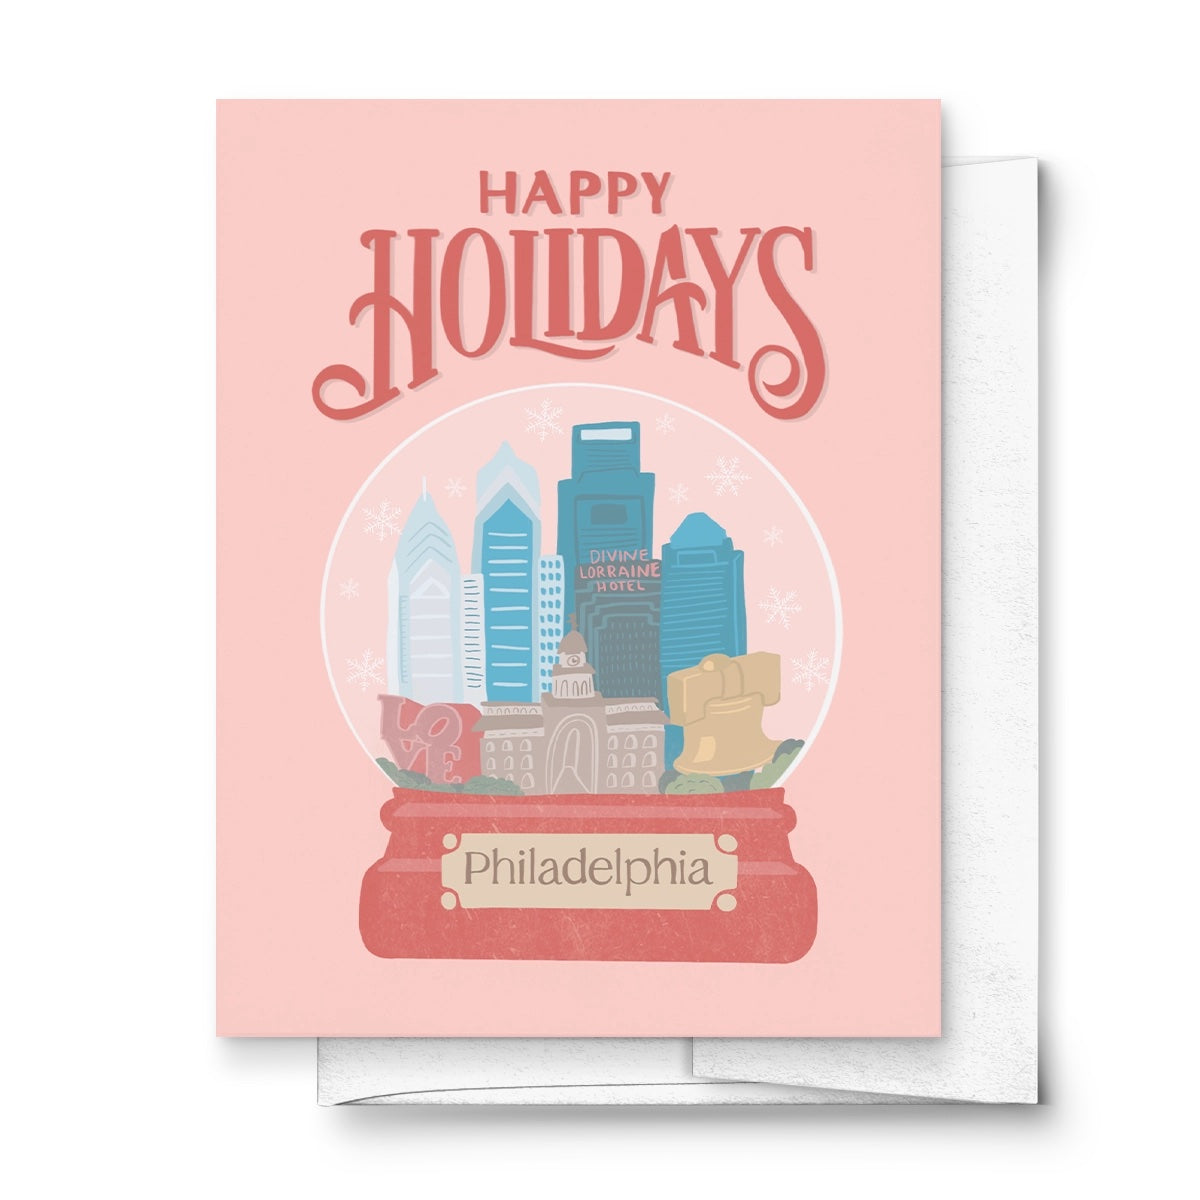 Philadelphia Snow Globe Holiday Greeting Card